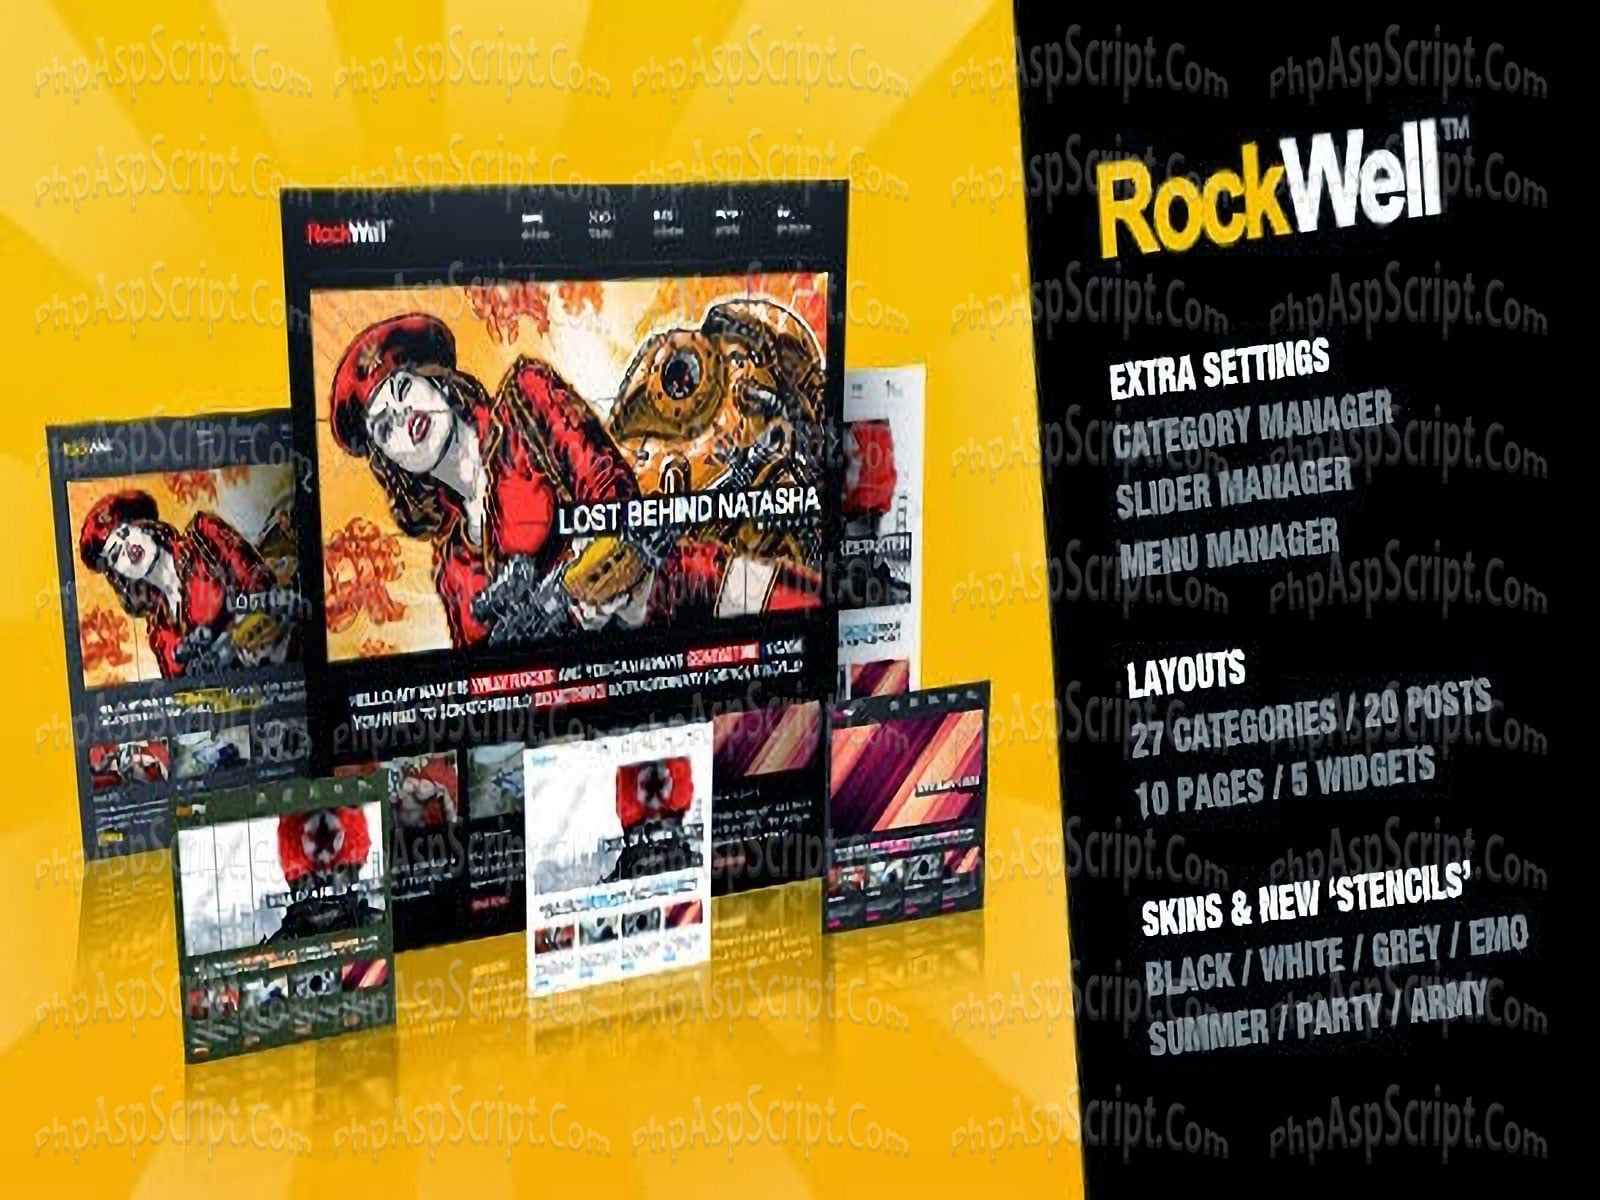 [Resim: RockWell-v2-%E2%80%93-Portfoy-ve-Blog-Wo...Temasi.jpg]